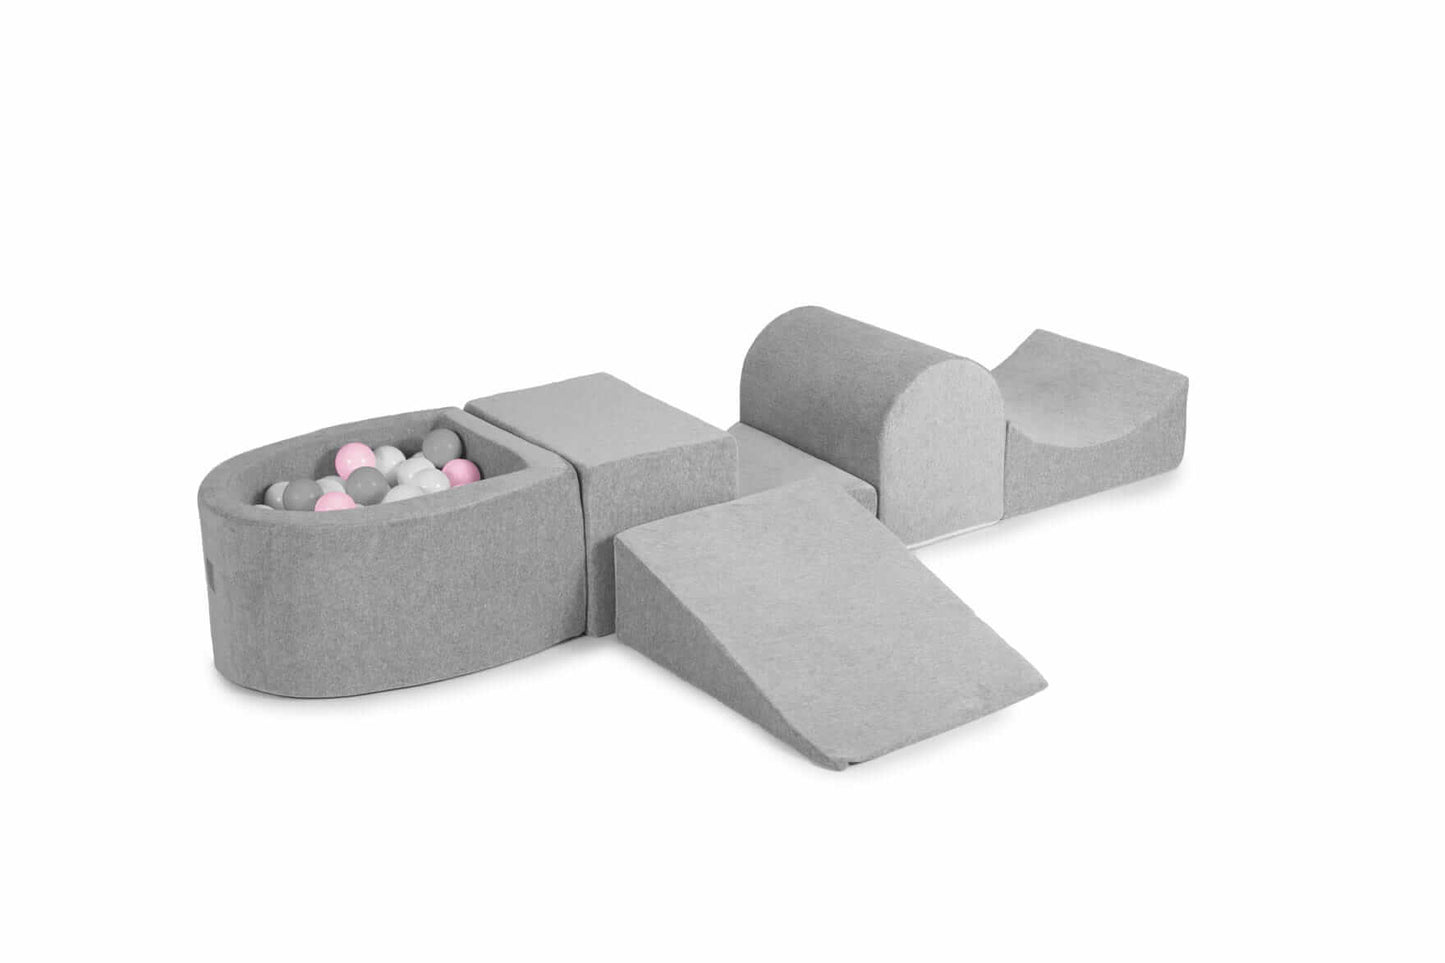 MeowBaby® Foam Play Set with Mini Ball Pit + 100 Balls, Light Grey